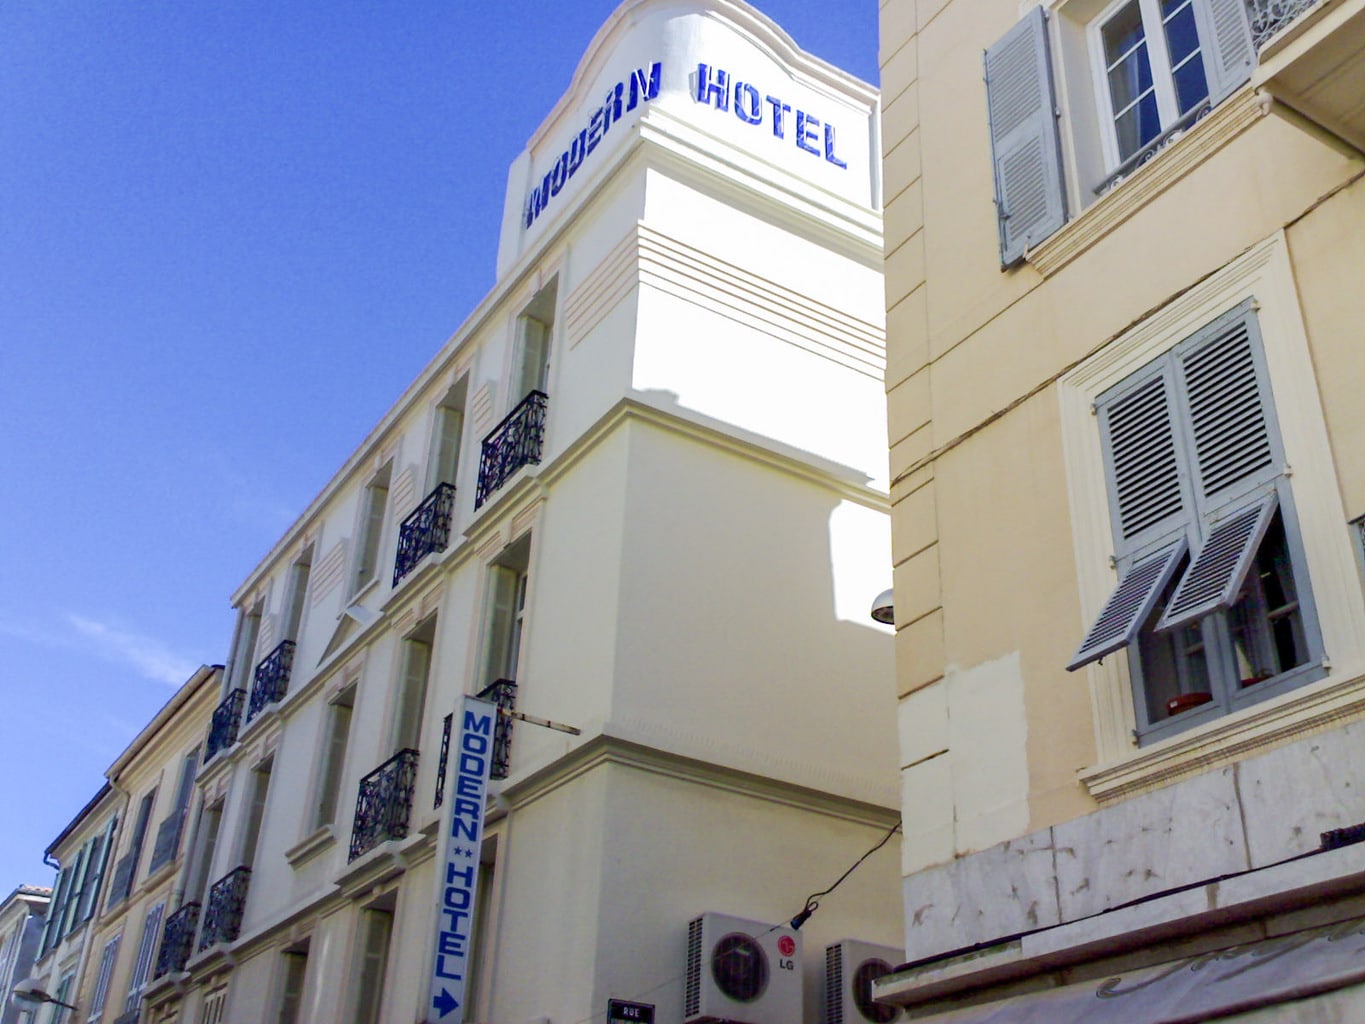 Modern Hotel